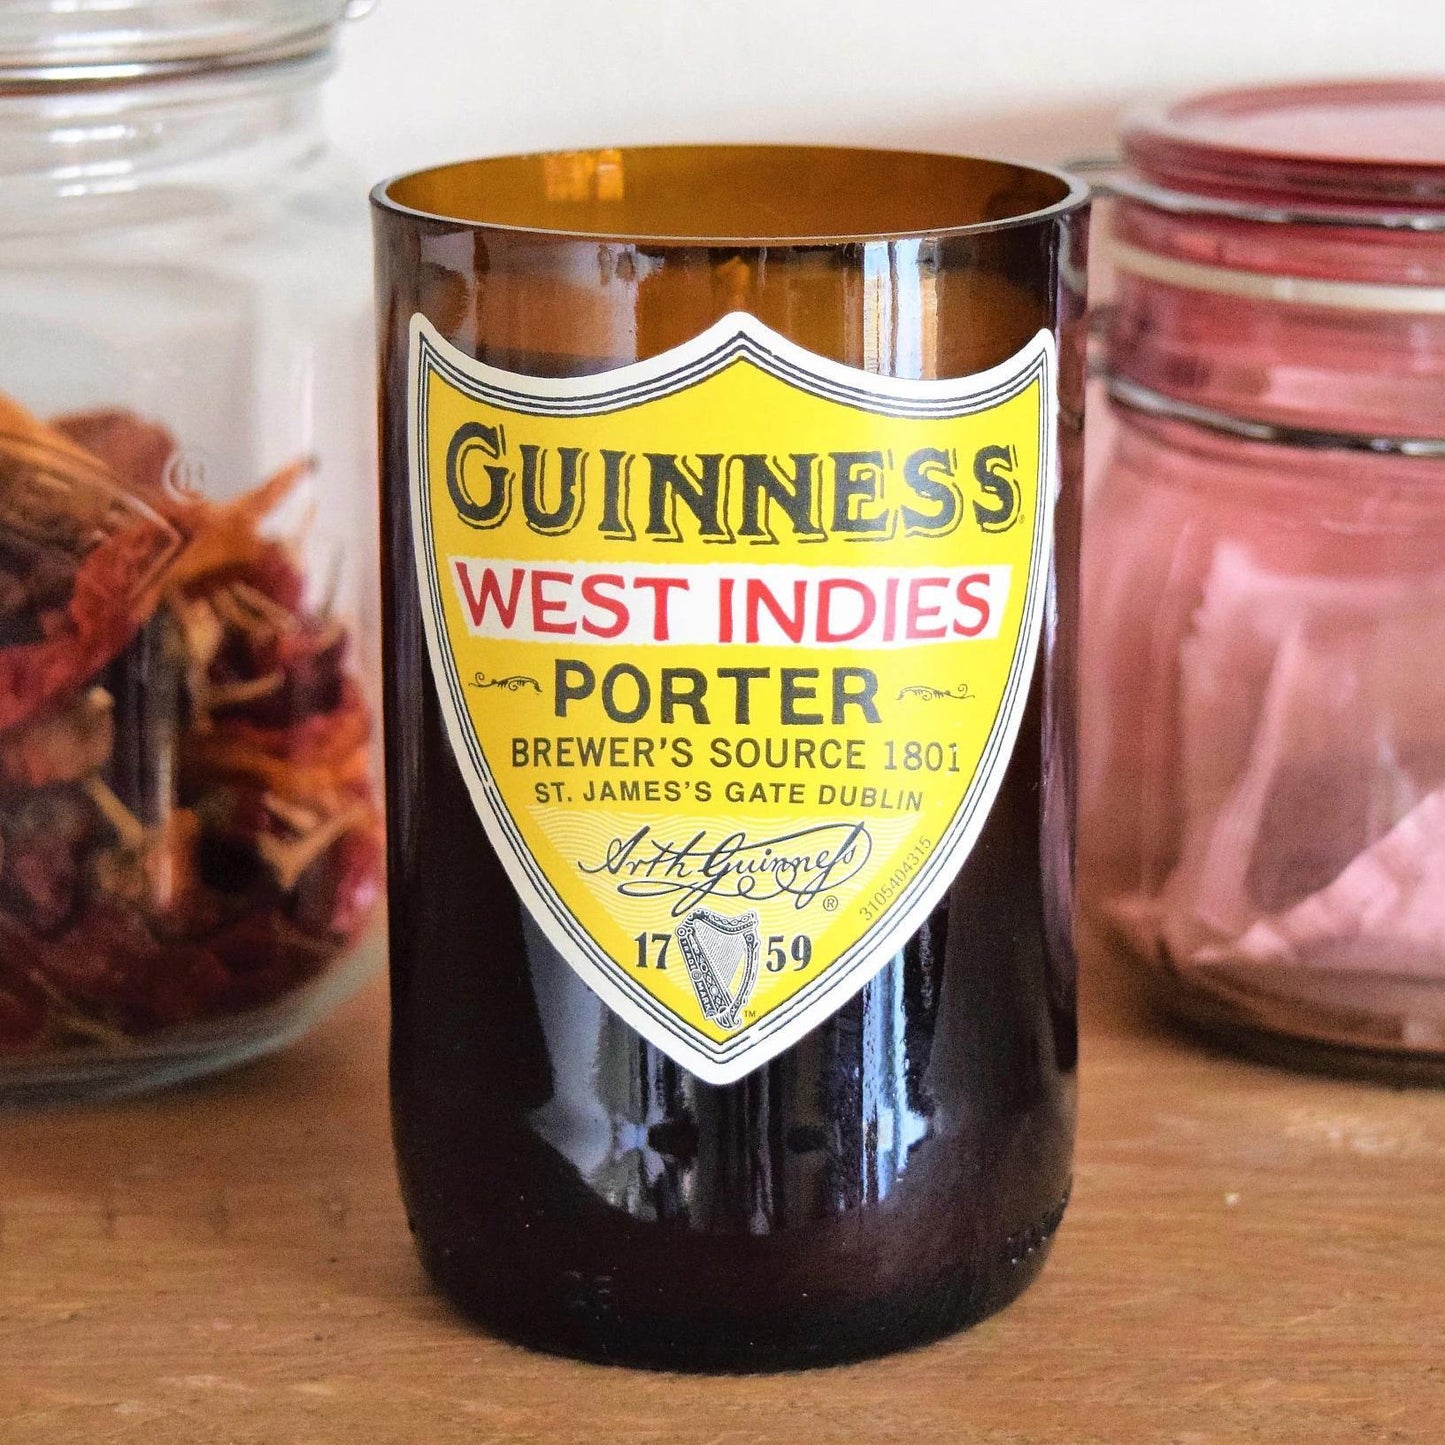 Guinness West Indies Porter Beer Bottle Candle Beer & Ale Bottle Candles Adhock Homeware